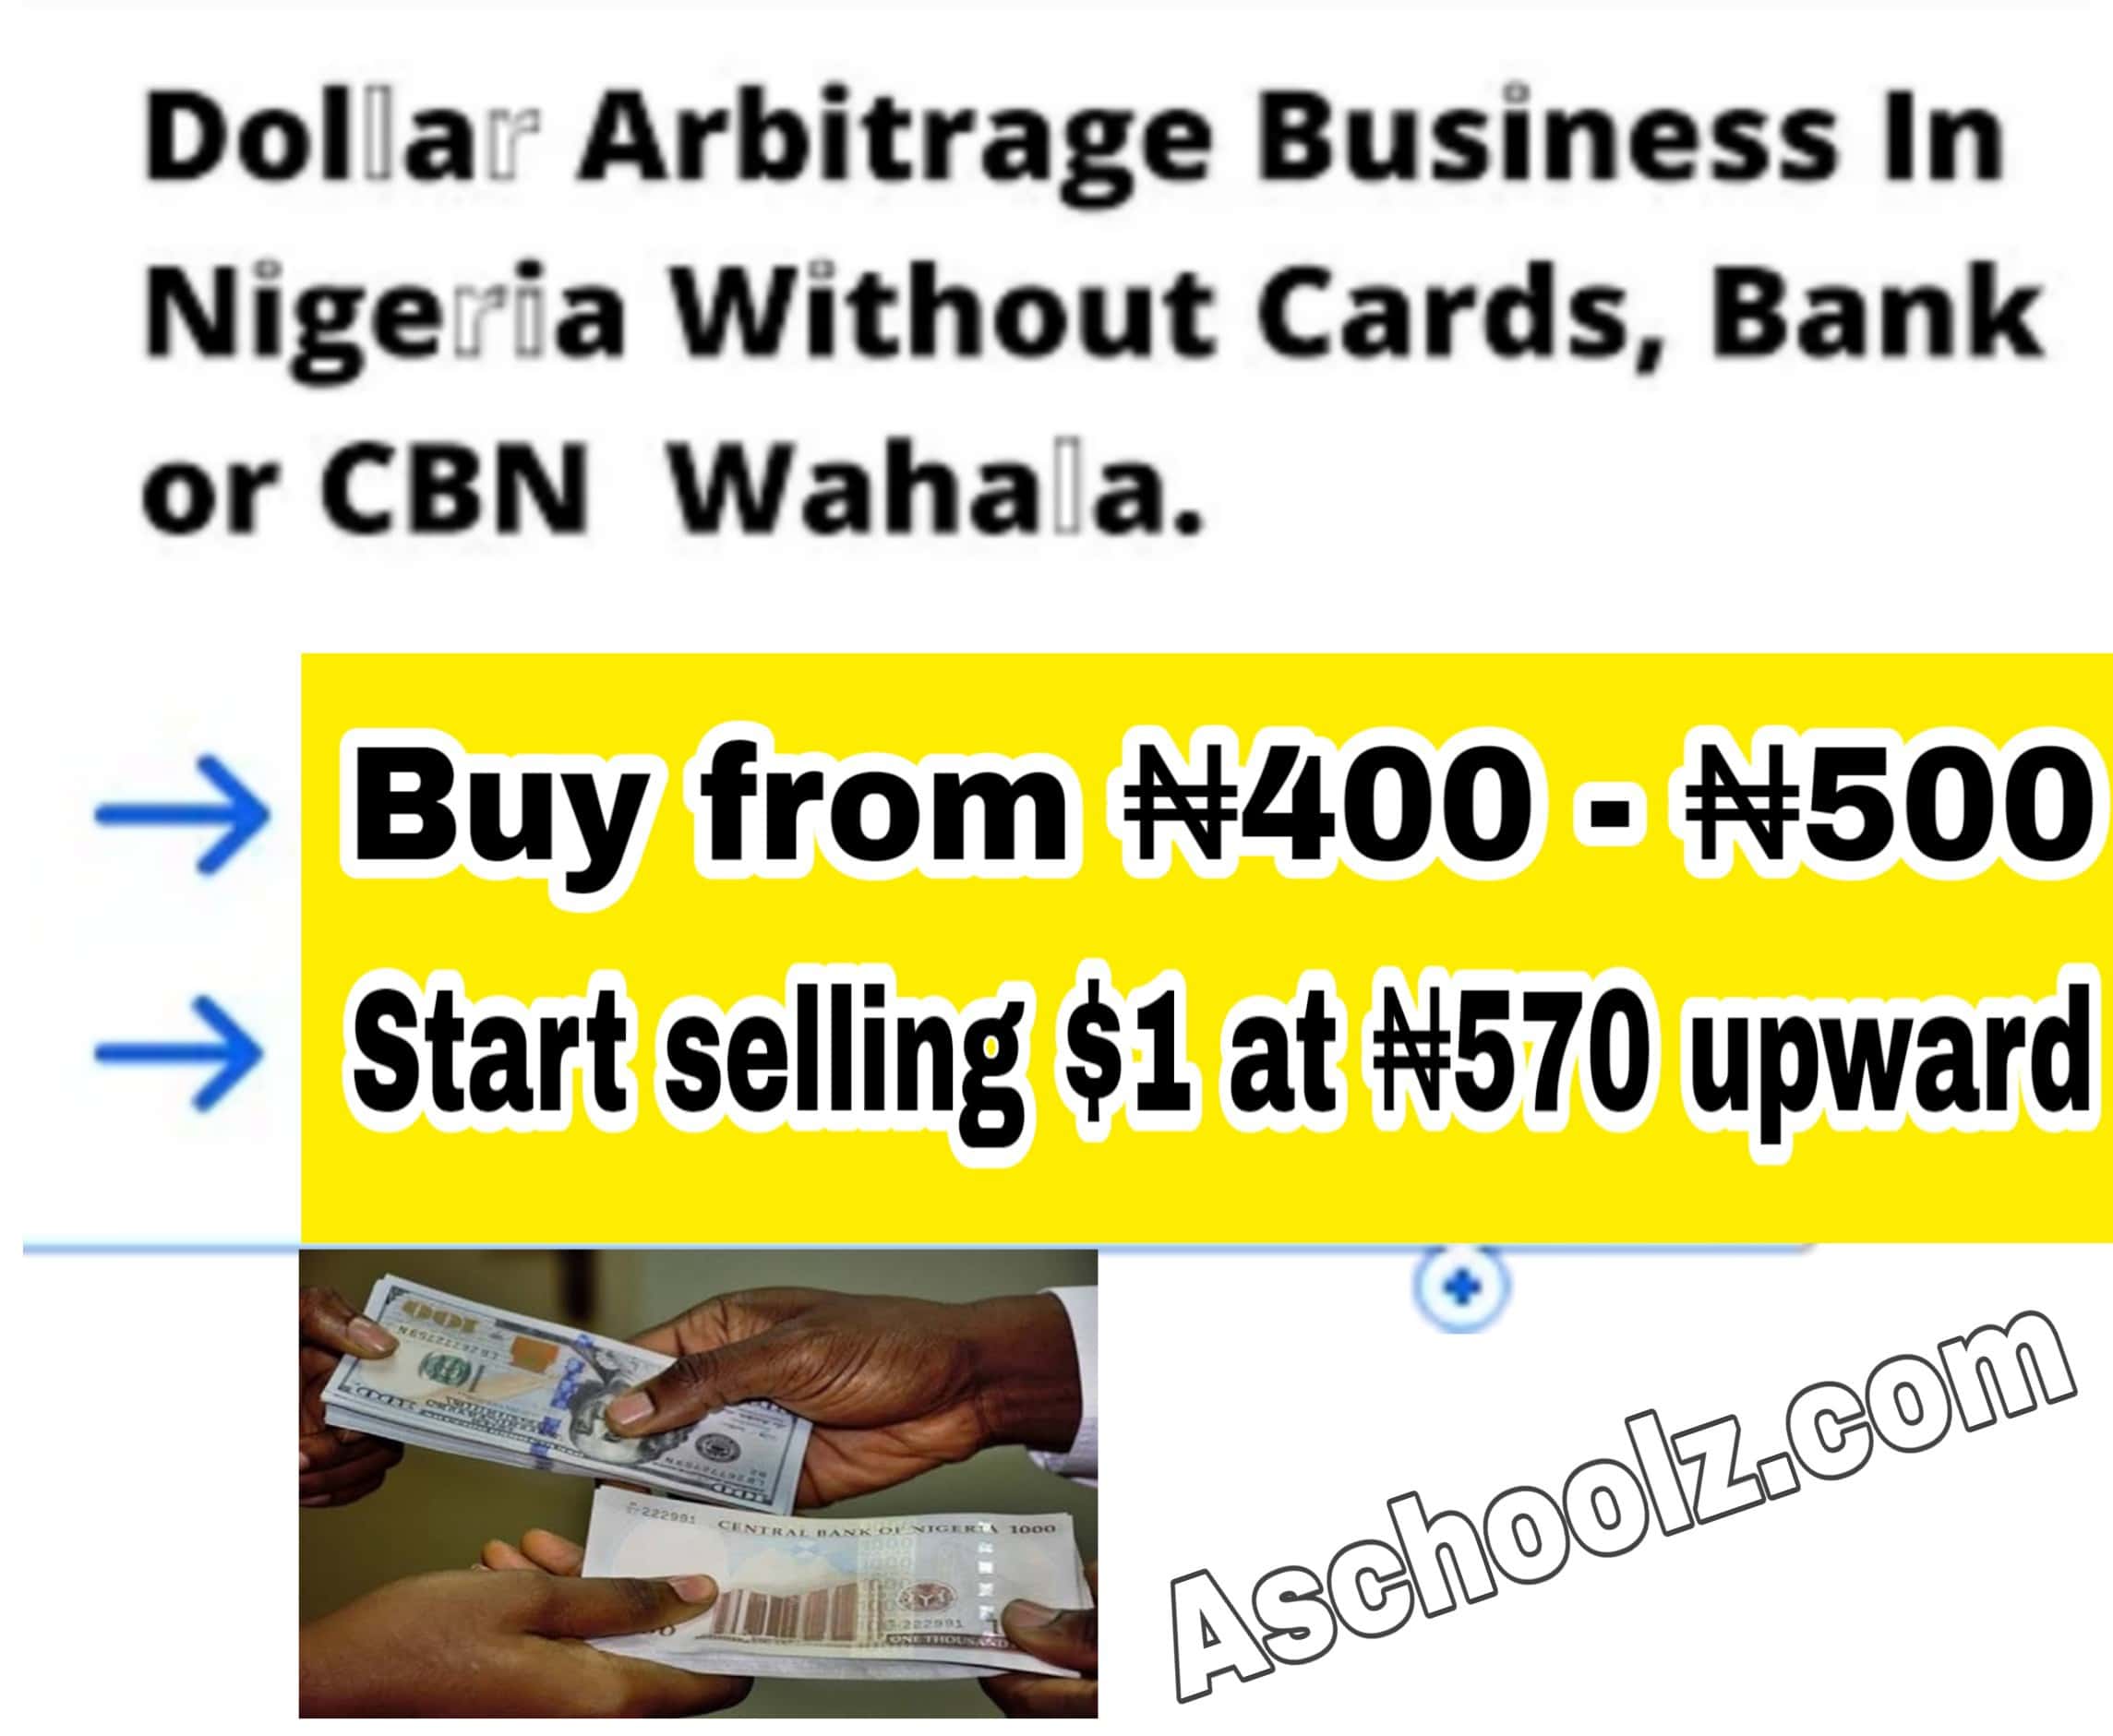 How to Start Dollar Arbitrage Business in Nigeria